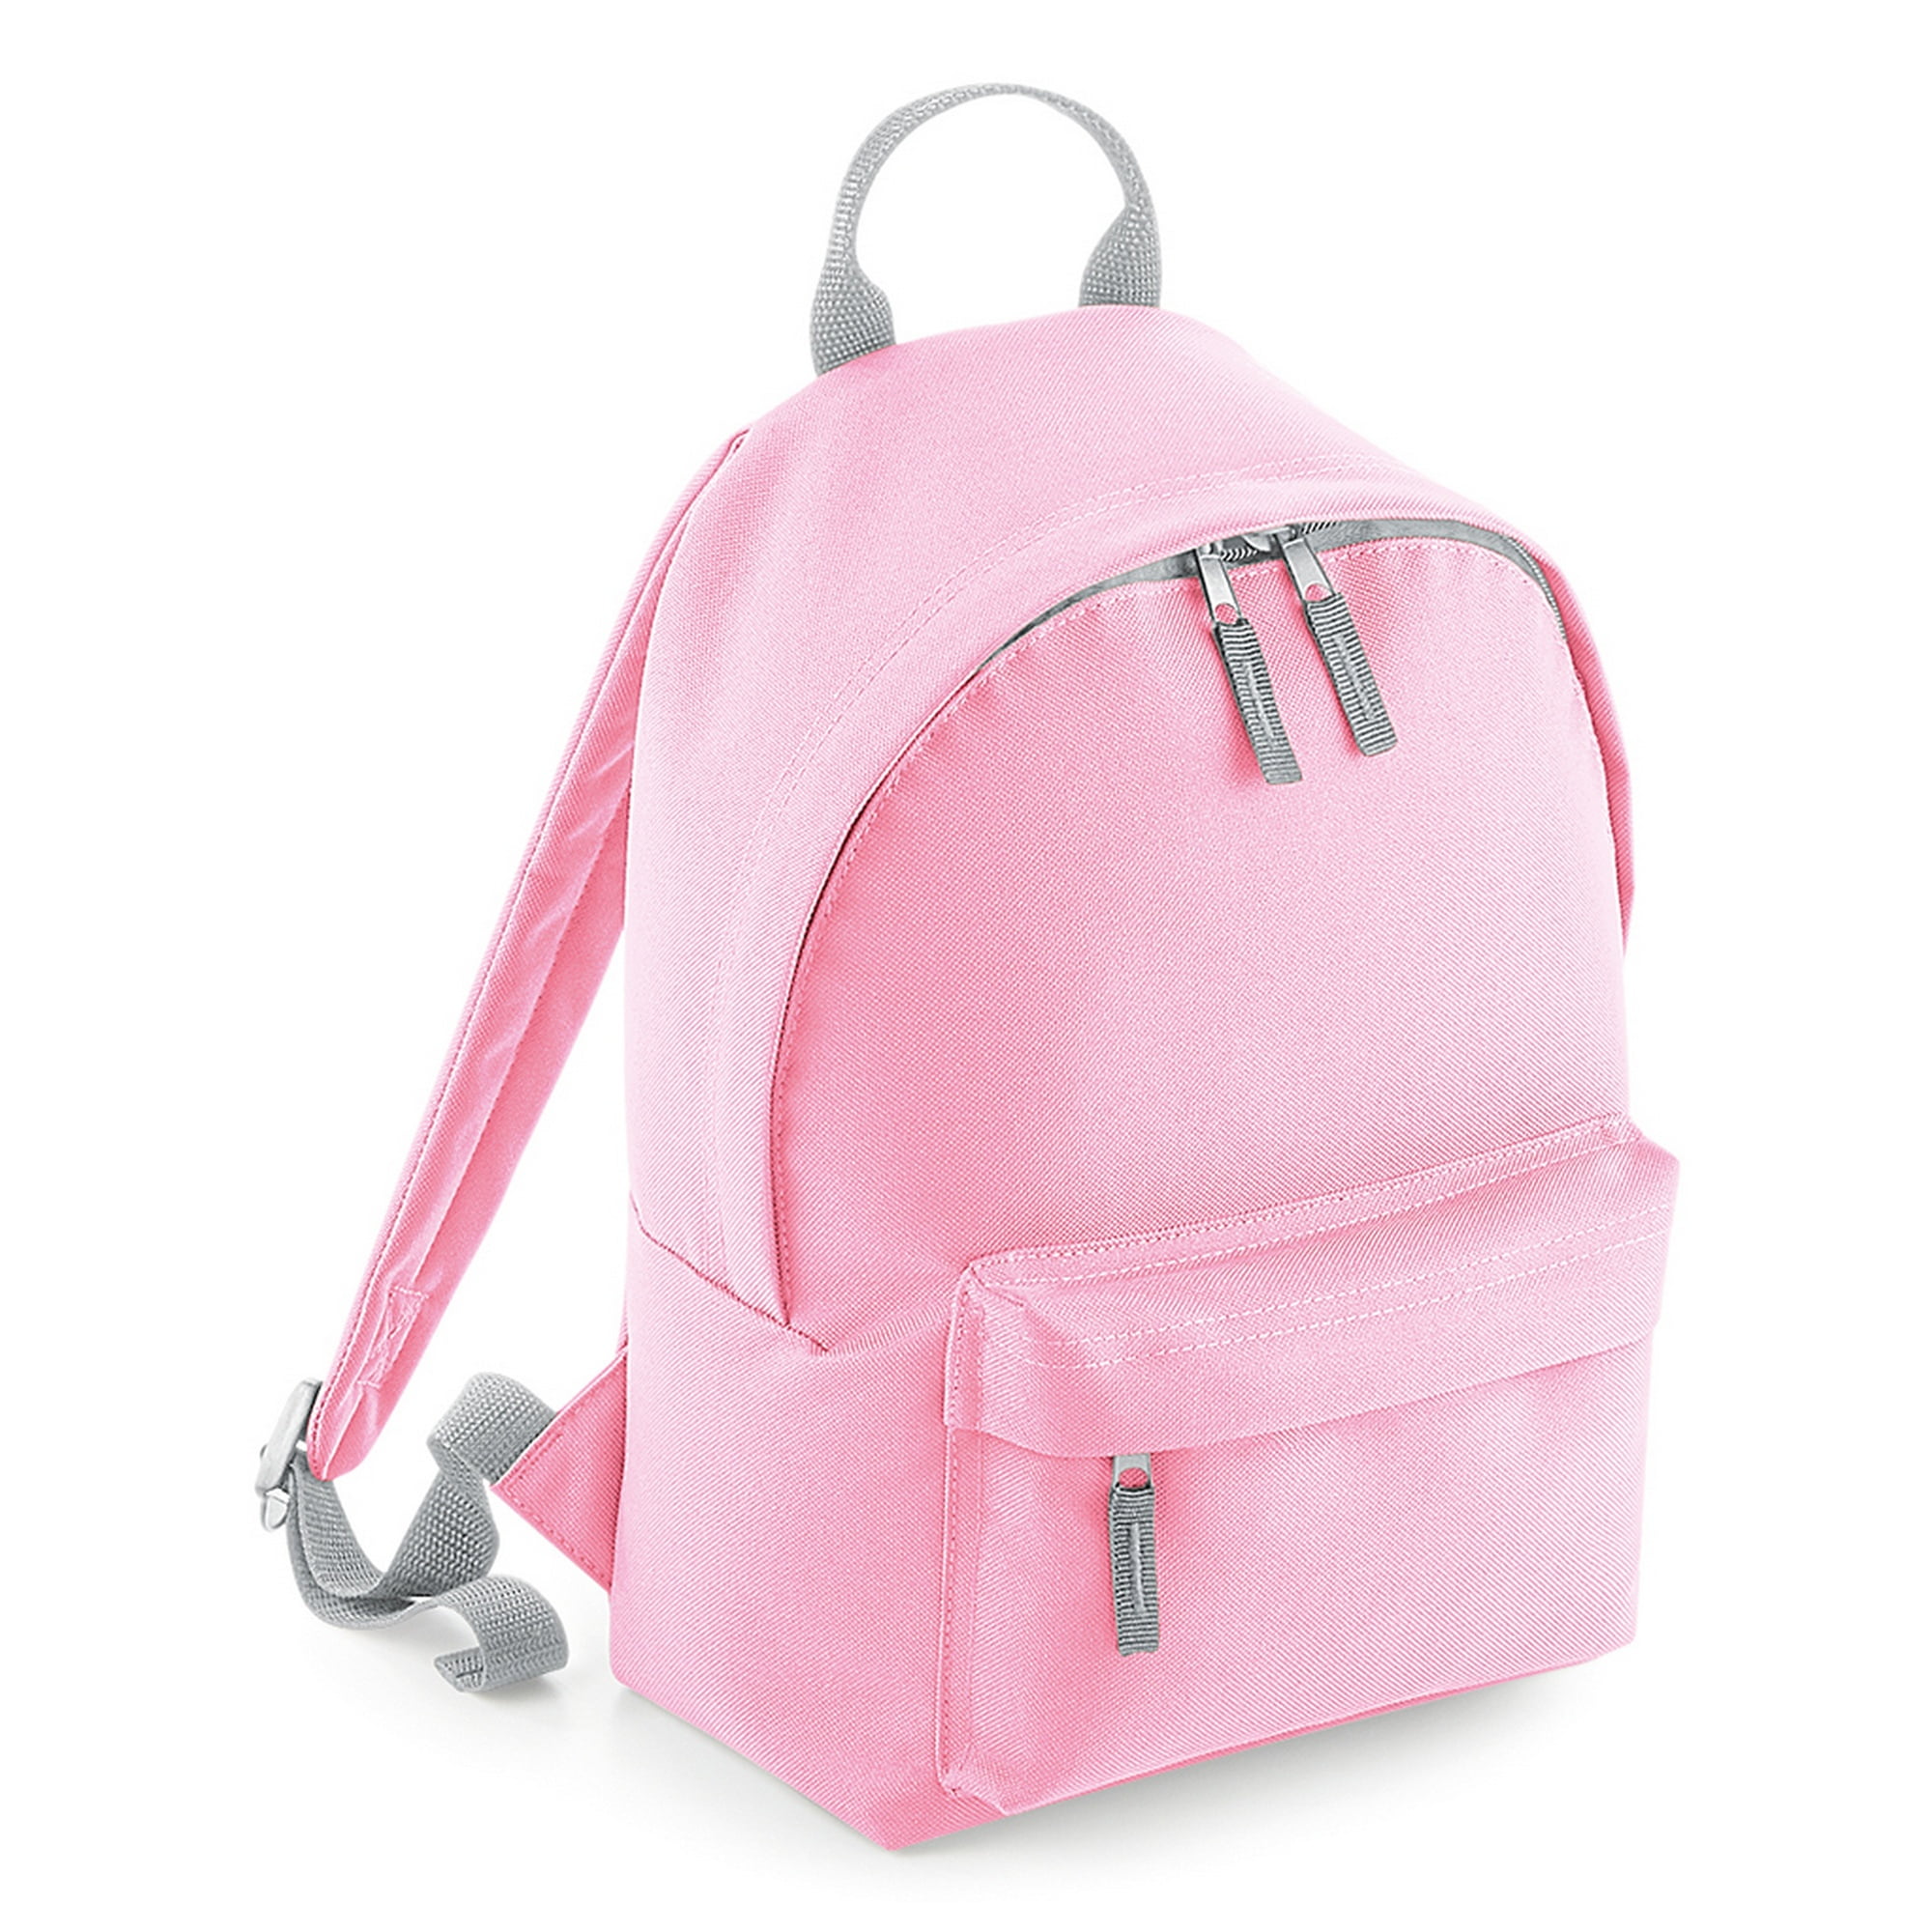 Bagbase original small fashion backpack/school college rucksack 